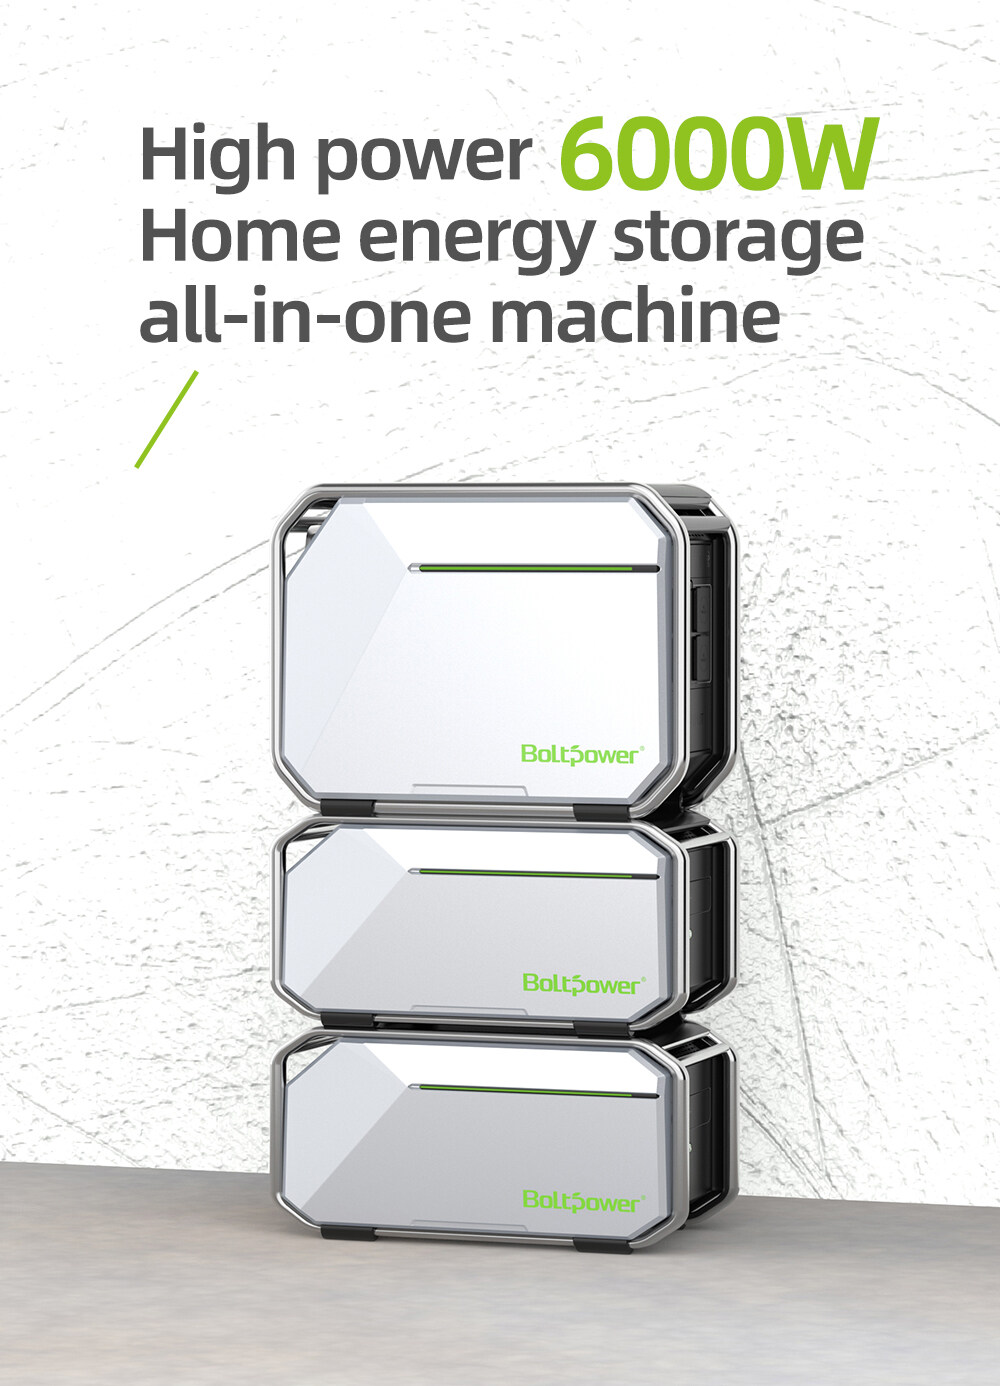 High power 6000W Home energy storageall-in-one machine.jpg